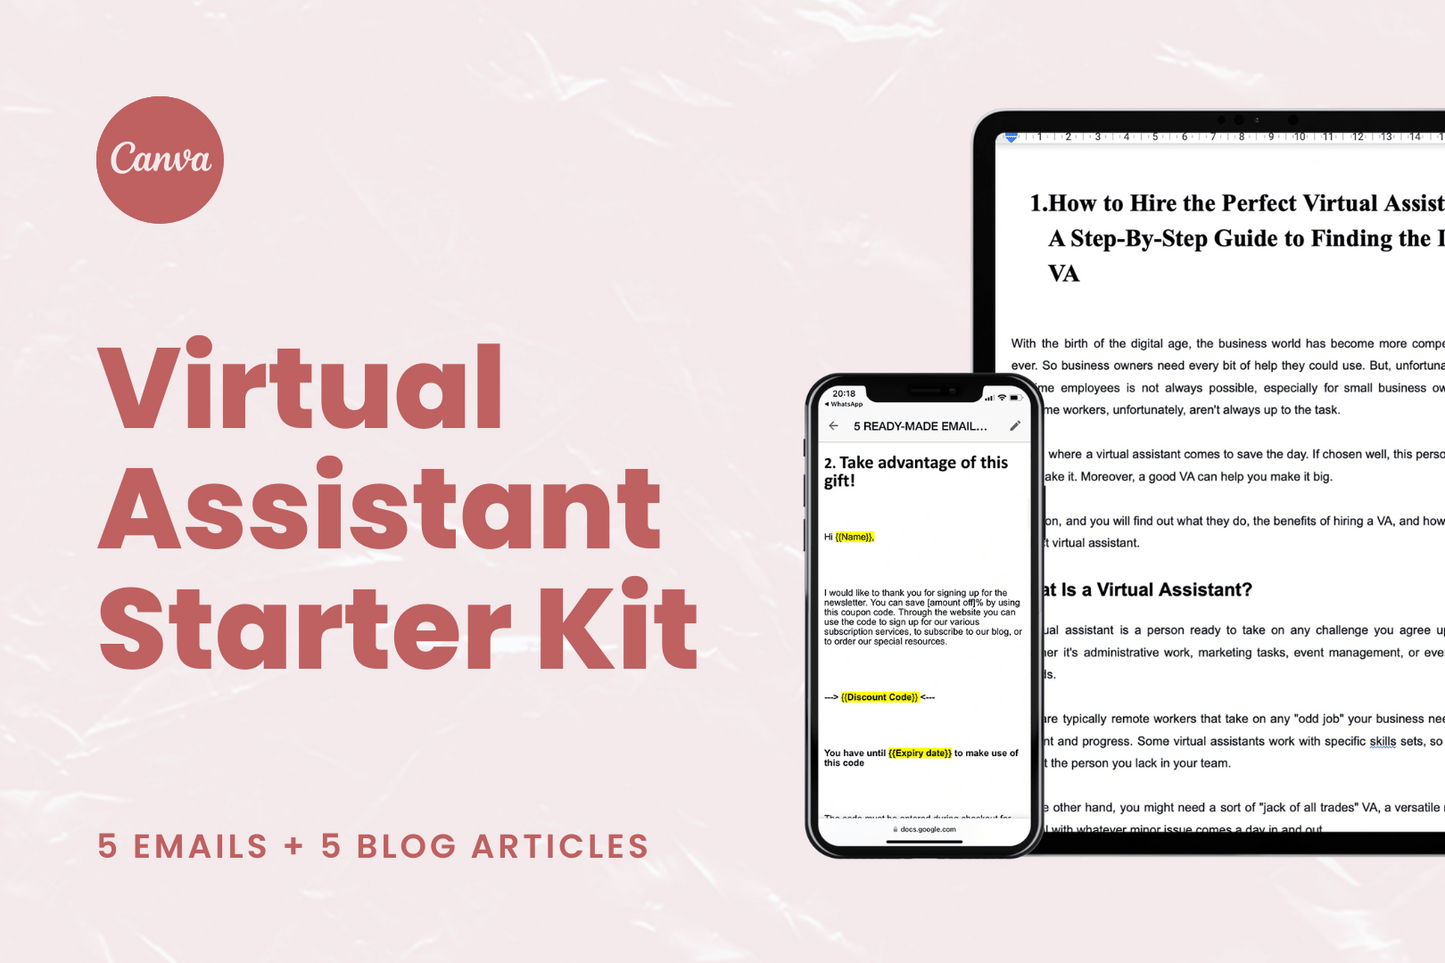 Virtual Assistant Starter Kit™